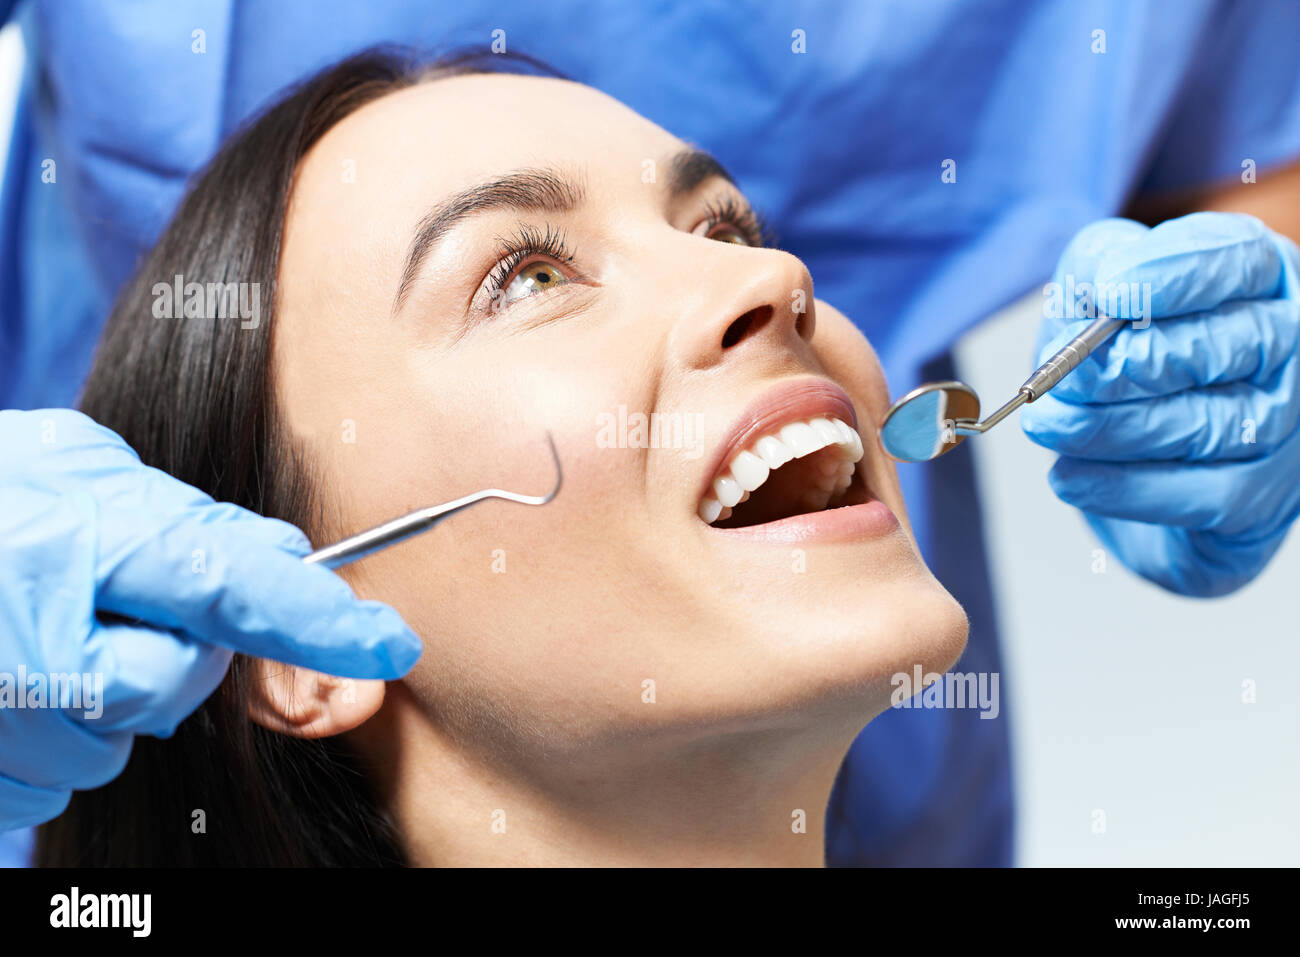 Young Woman Having Check Up And Dental Exam At Dentist Stock Photo